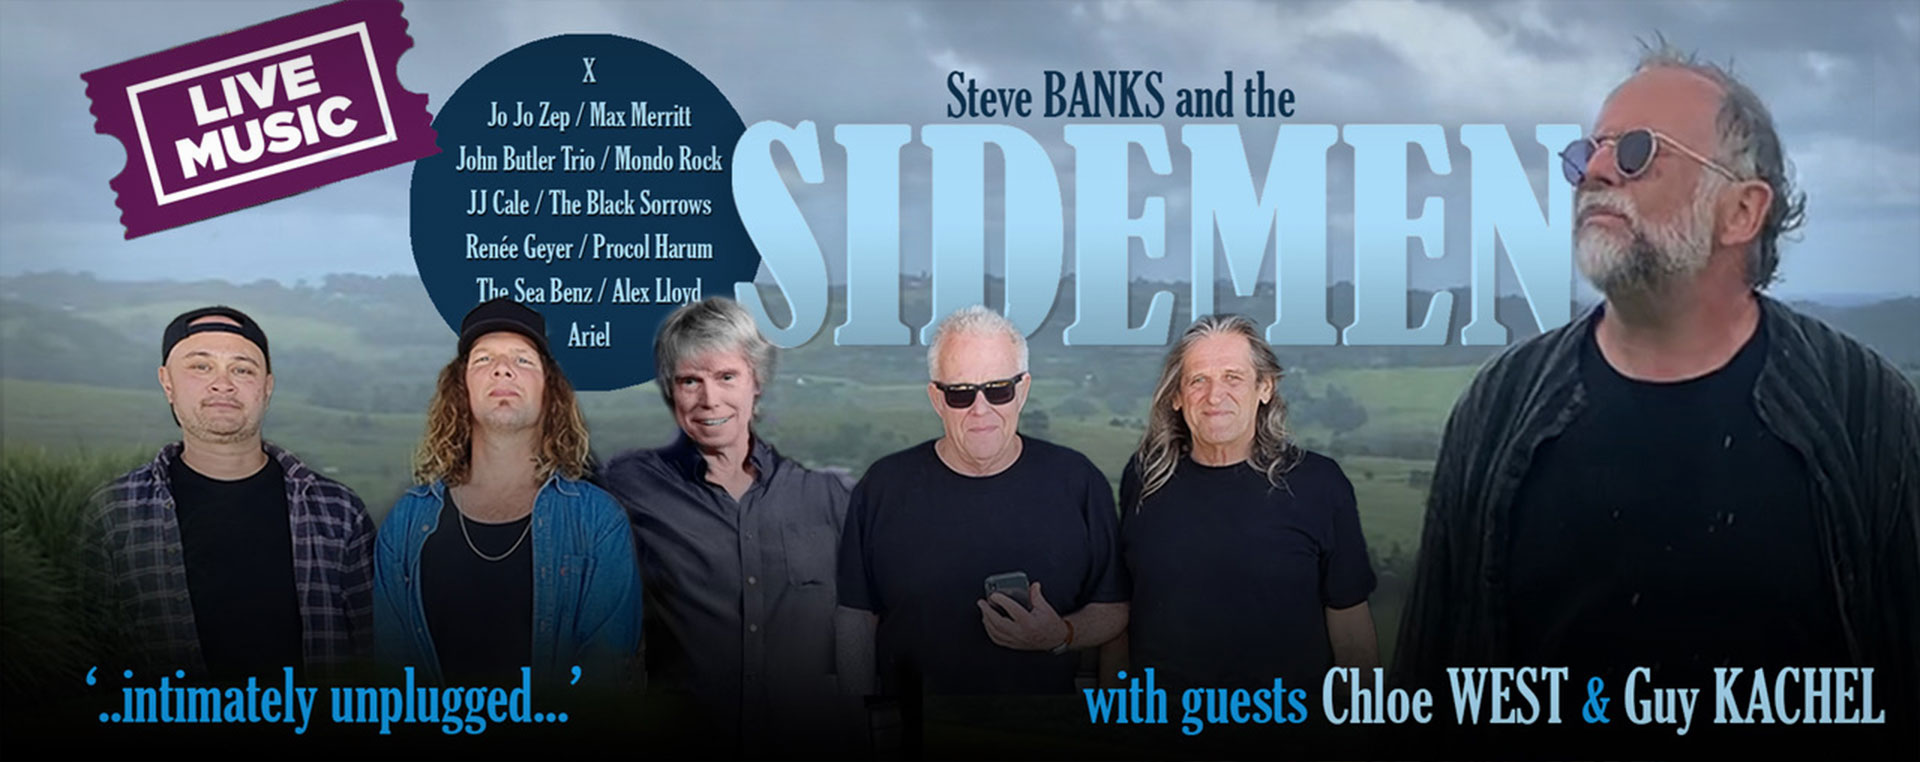 Steve Banks and the Sidemen 6 Jul NSW